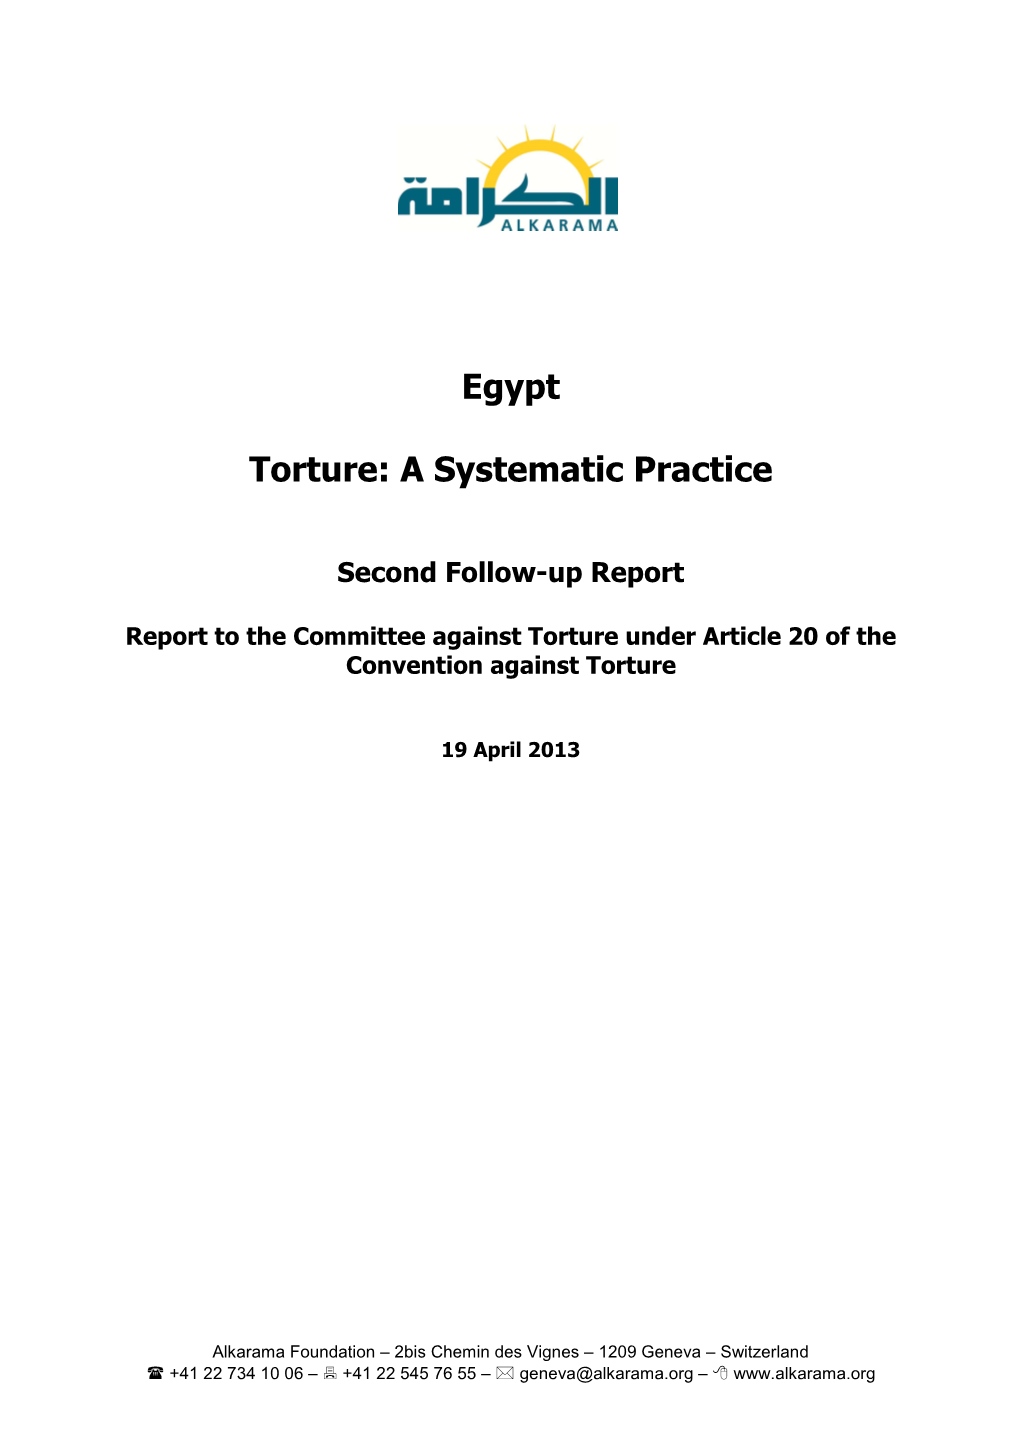 Egypt Torture